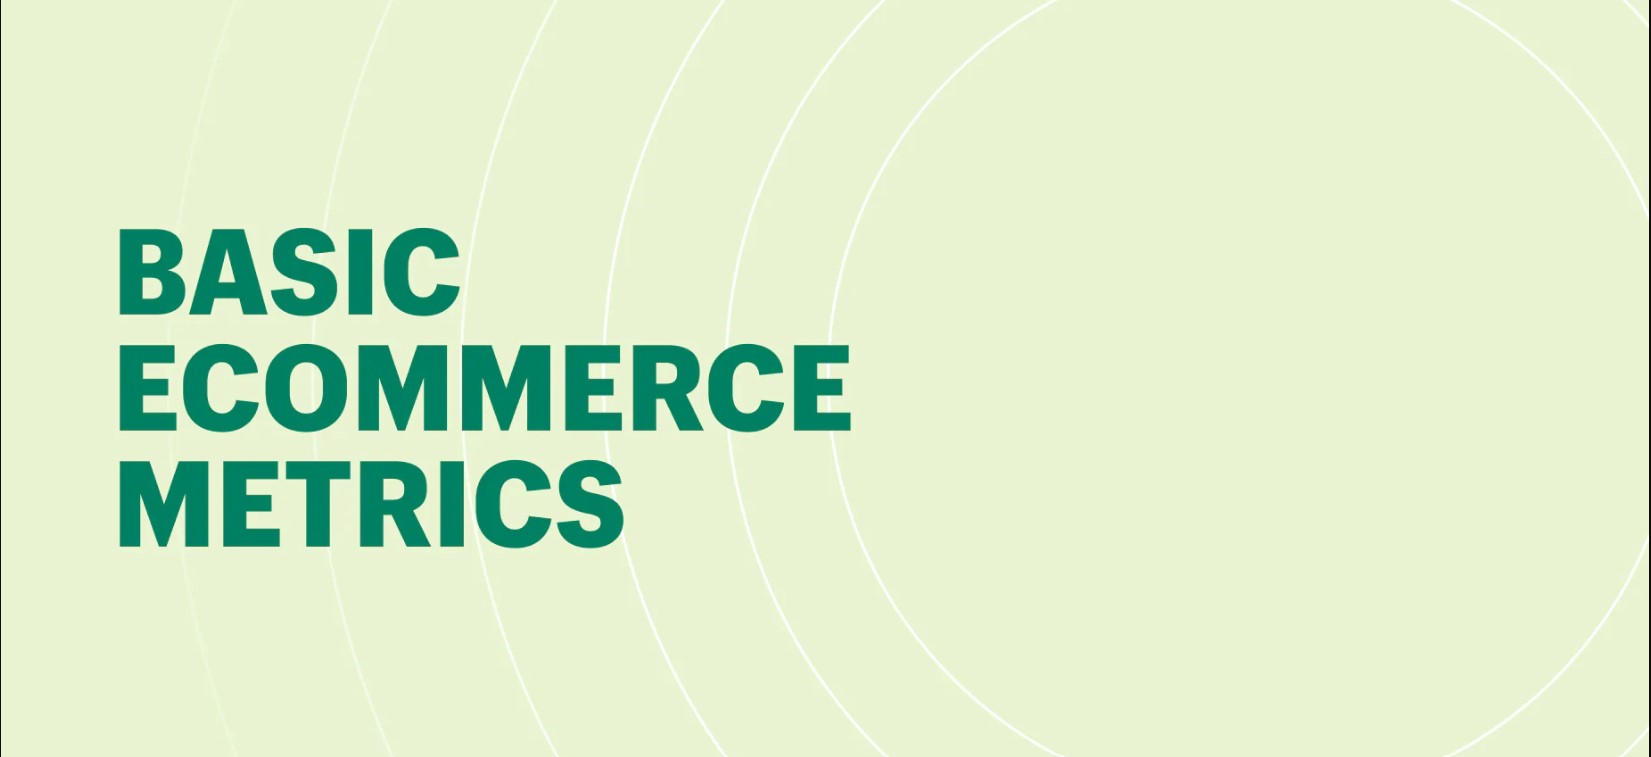 Key E-Commerce Metrics You Should Be Tracking